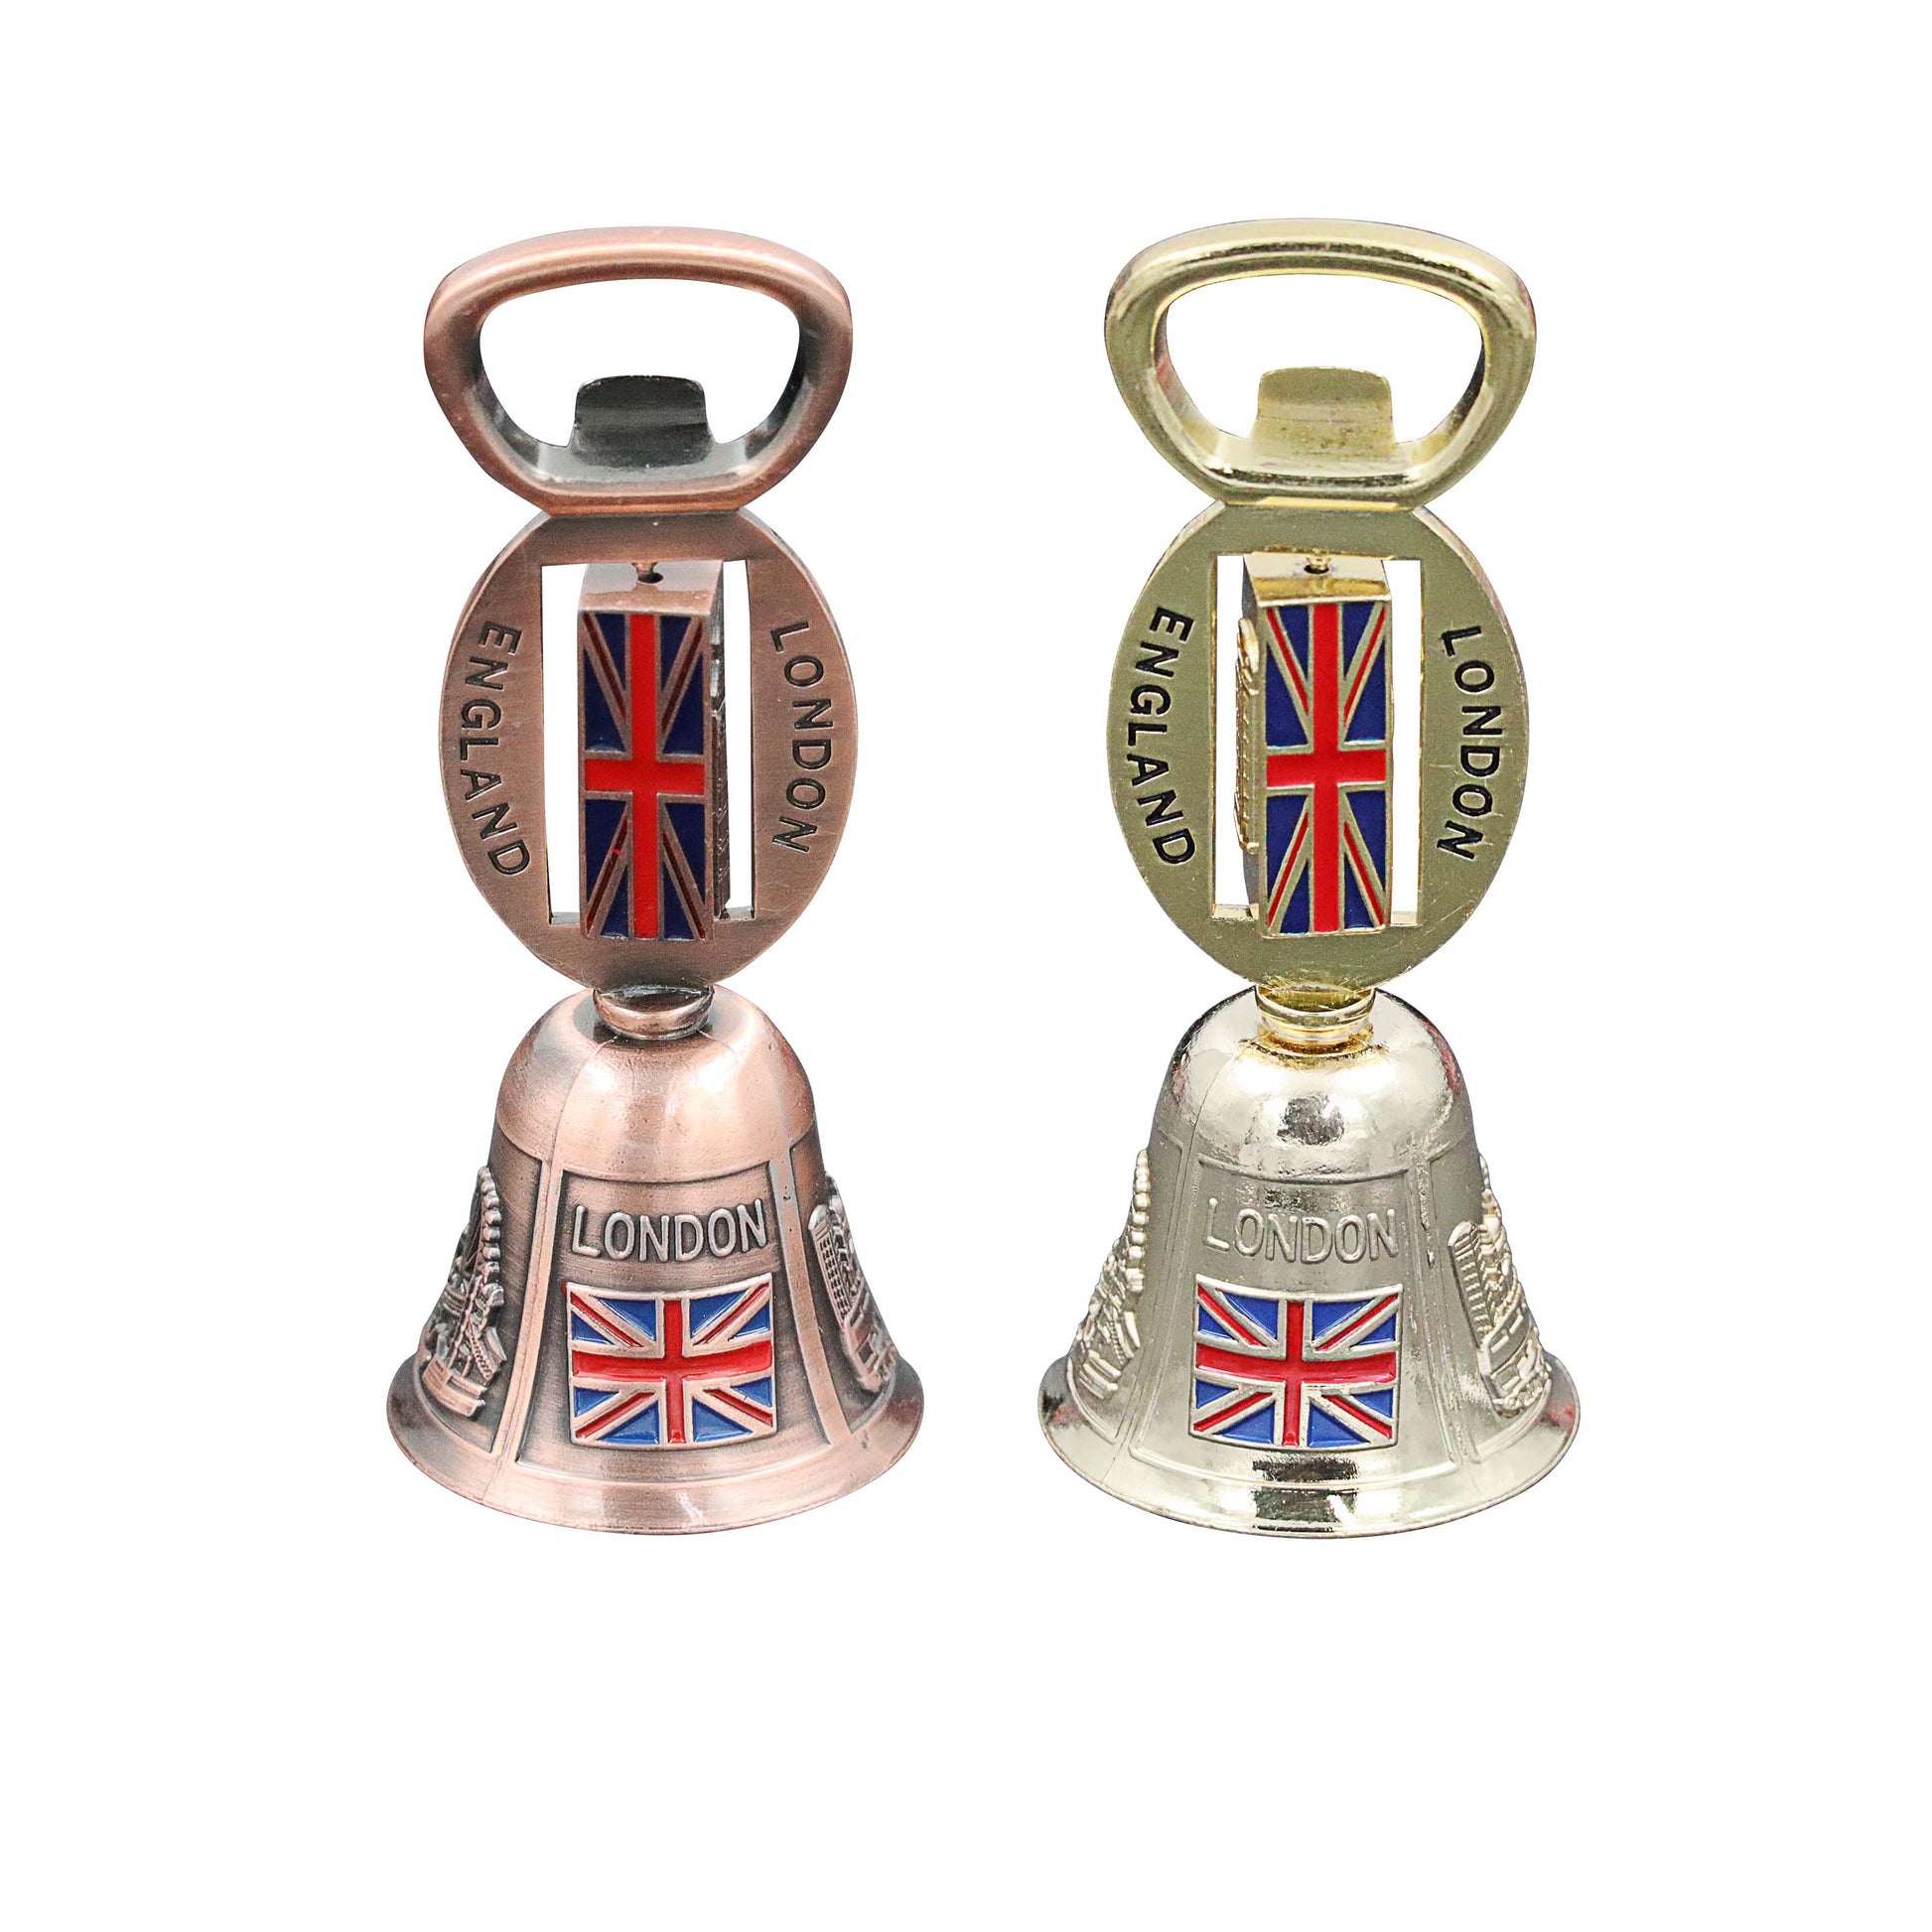 London souvenir dinner bells & bottle openers